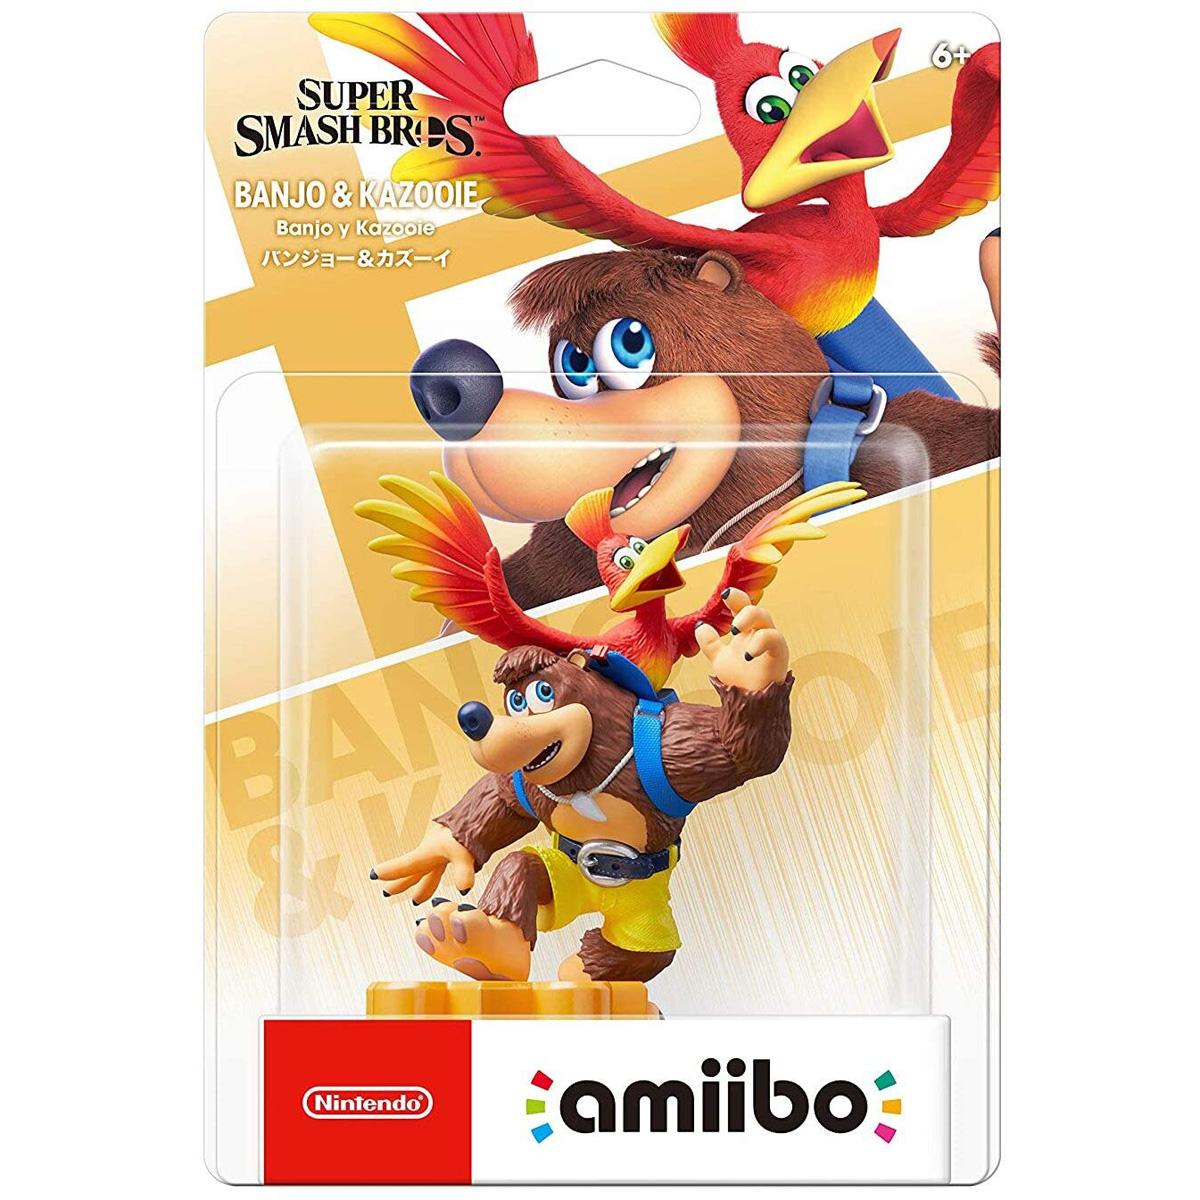 Banjo and Kazooie Super Smash Bros Nintendo Amiibo for $15.99